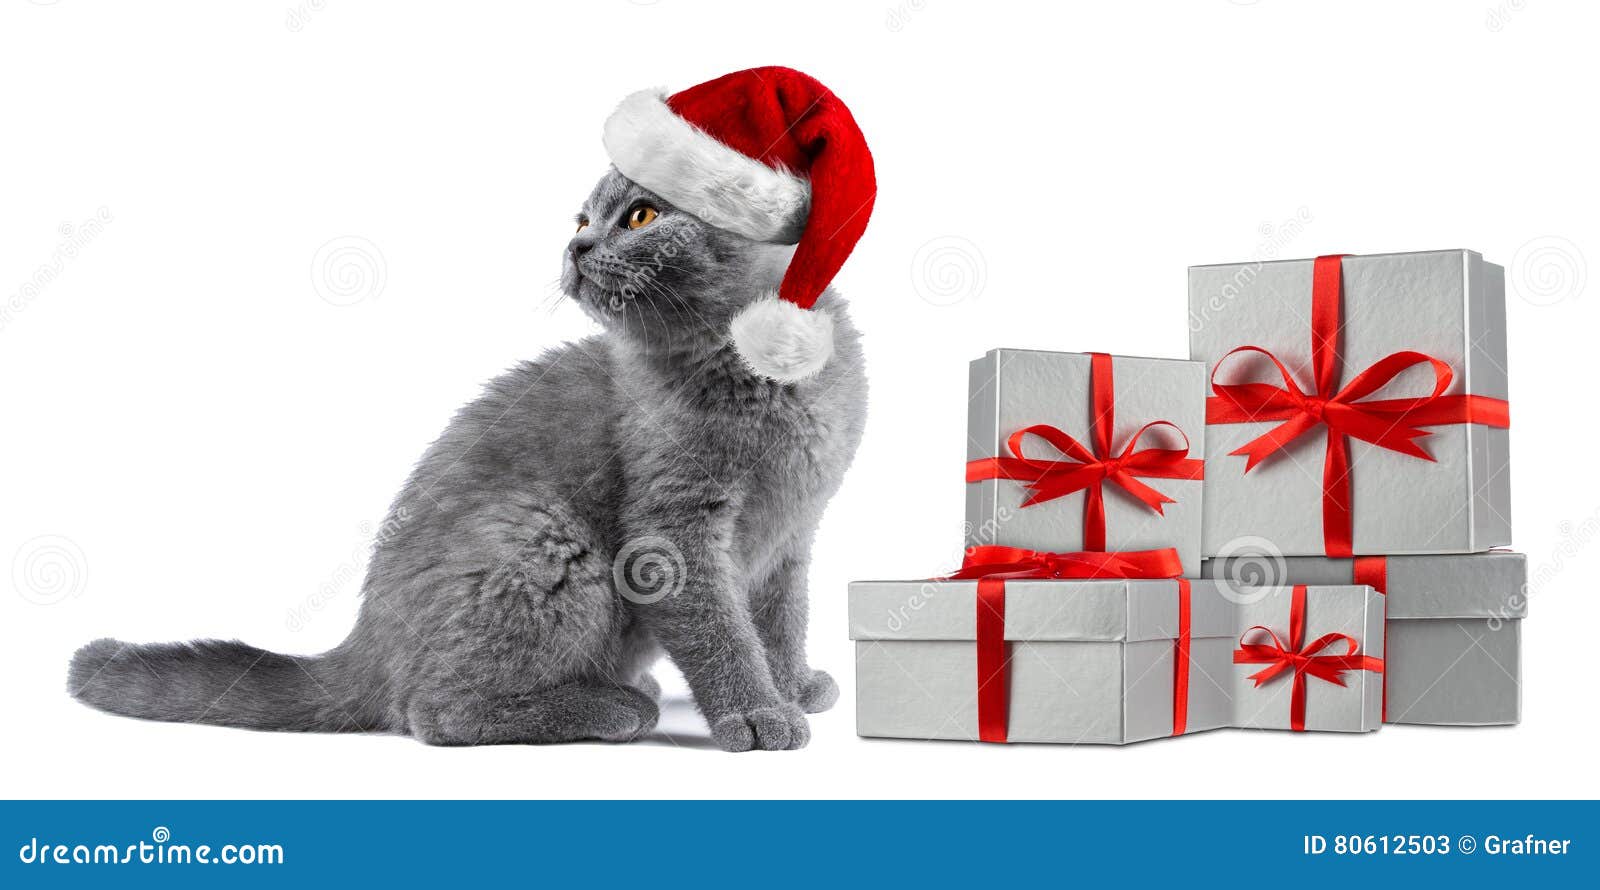 Kitten Cat Blue British Shorthair With Red White Santa Hat Gift